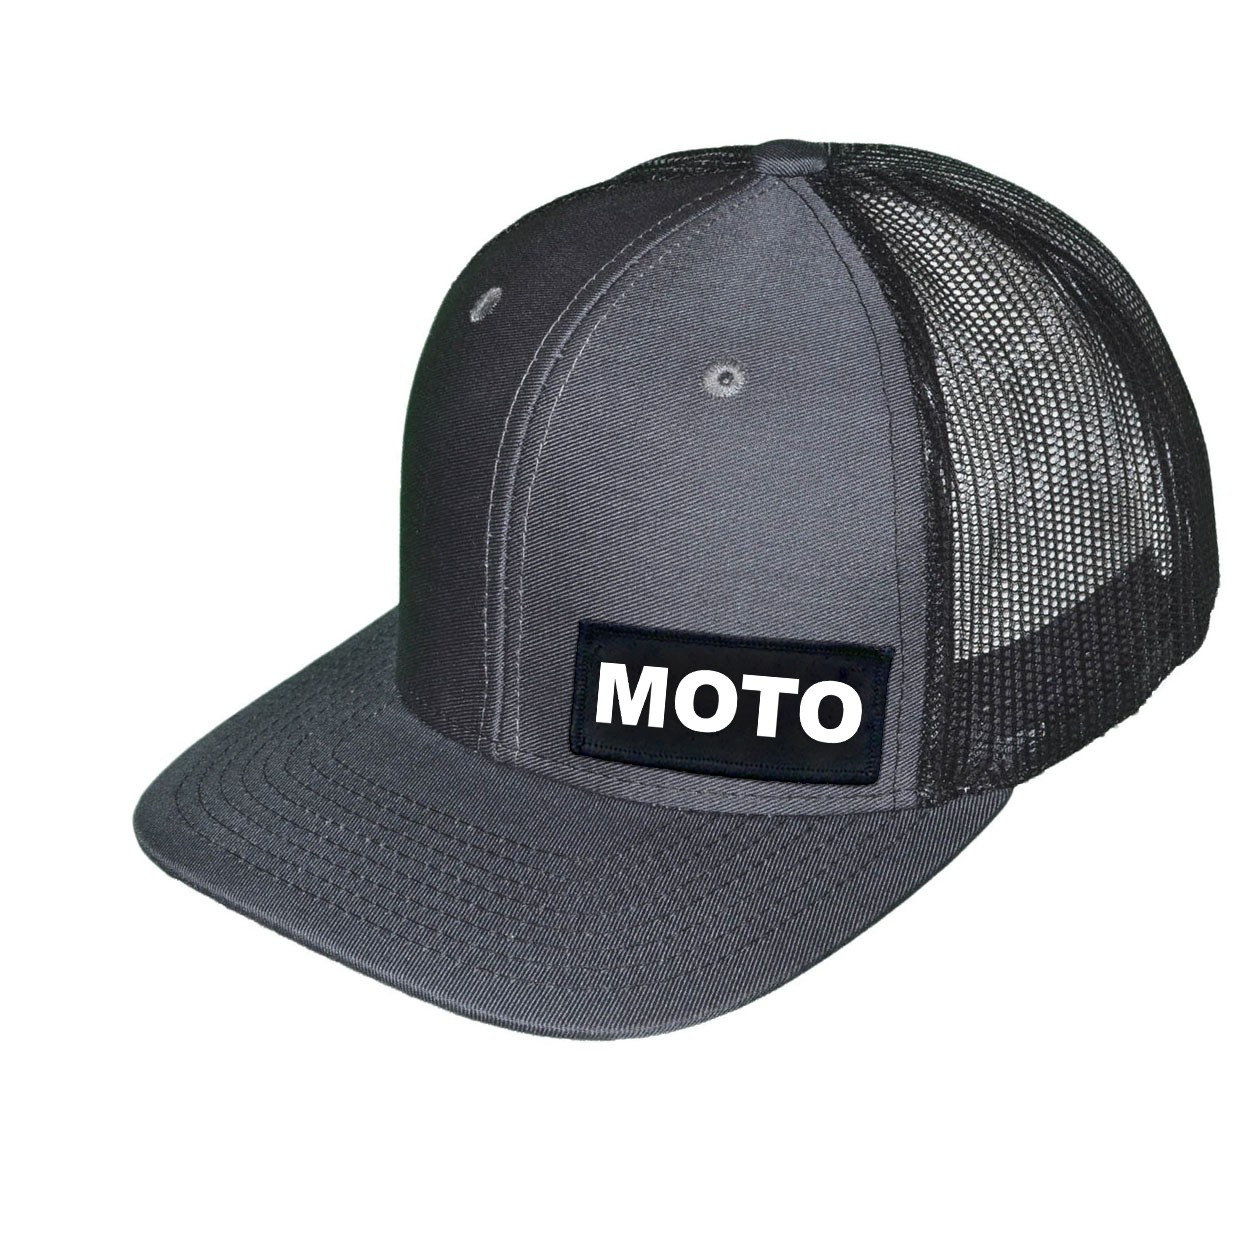 Moto Brand Logo Night Out Woven Patch Snapback Trucker Hat Dark Gray/Black